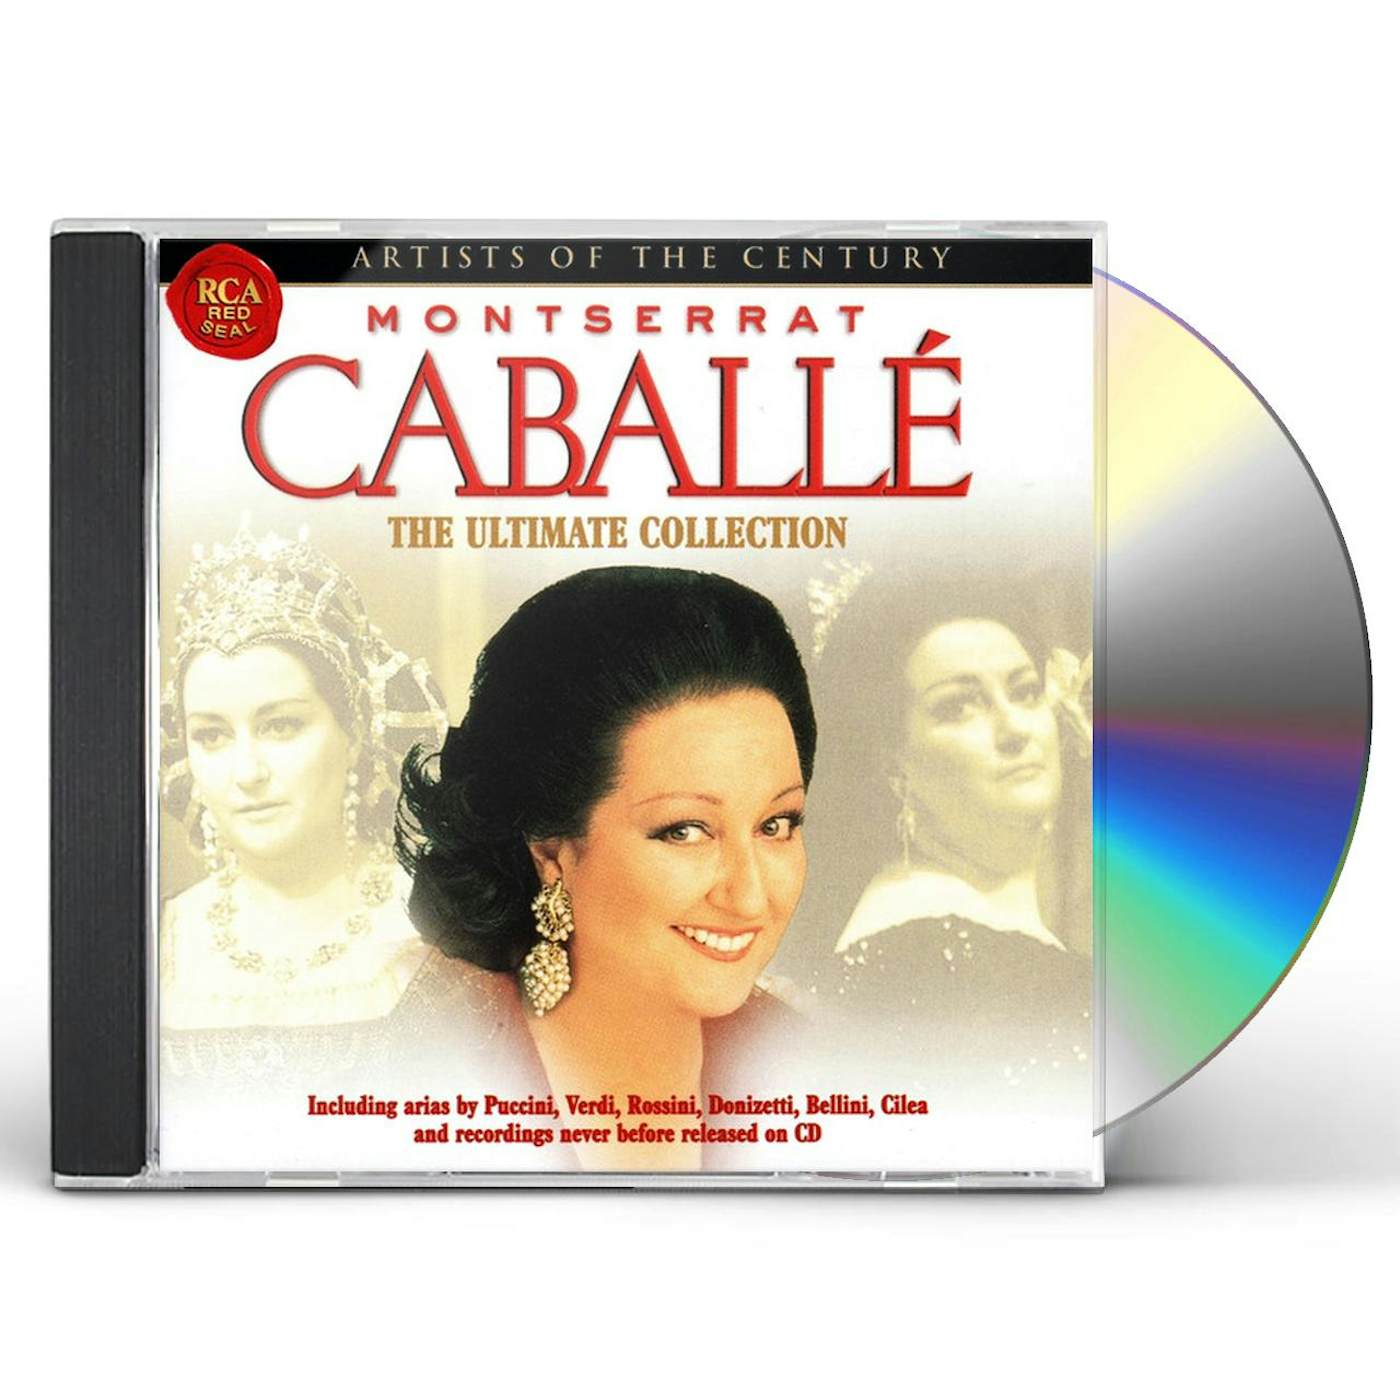 Montserrat Caballé ARTISTS OF THE CENTURY CD